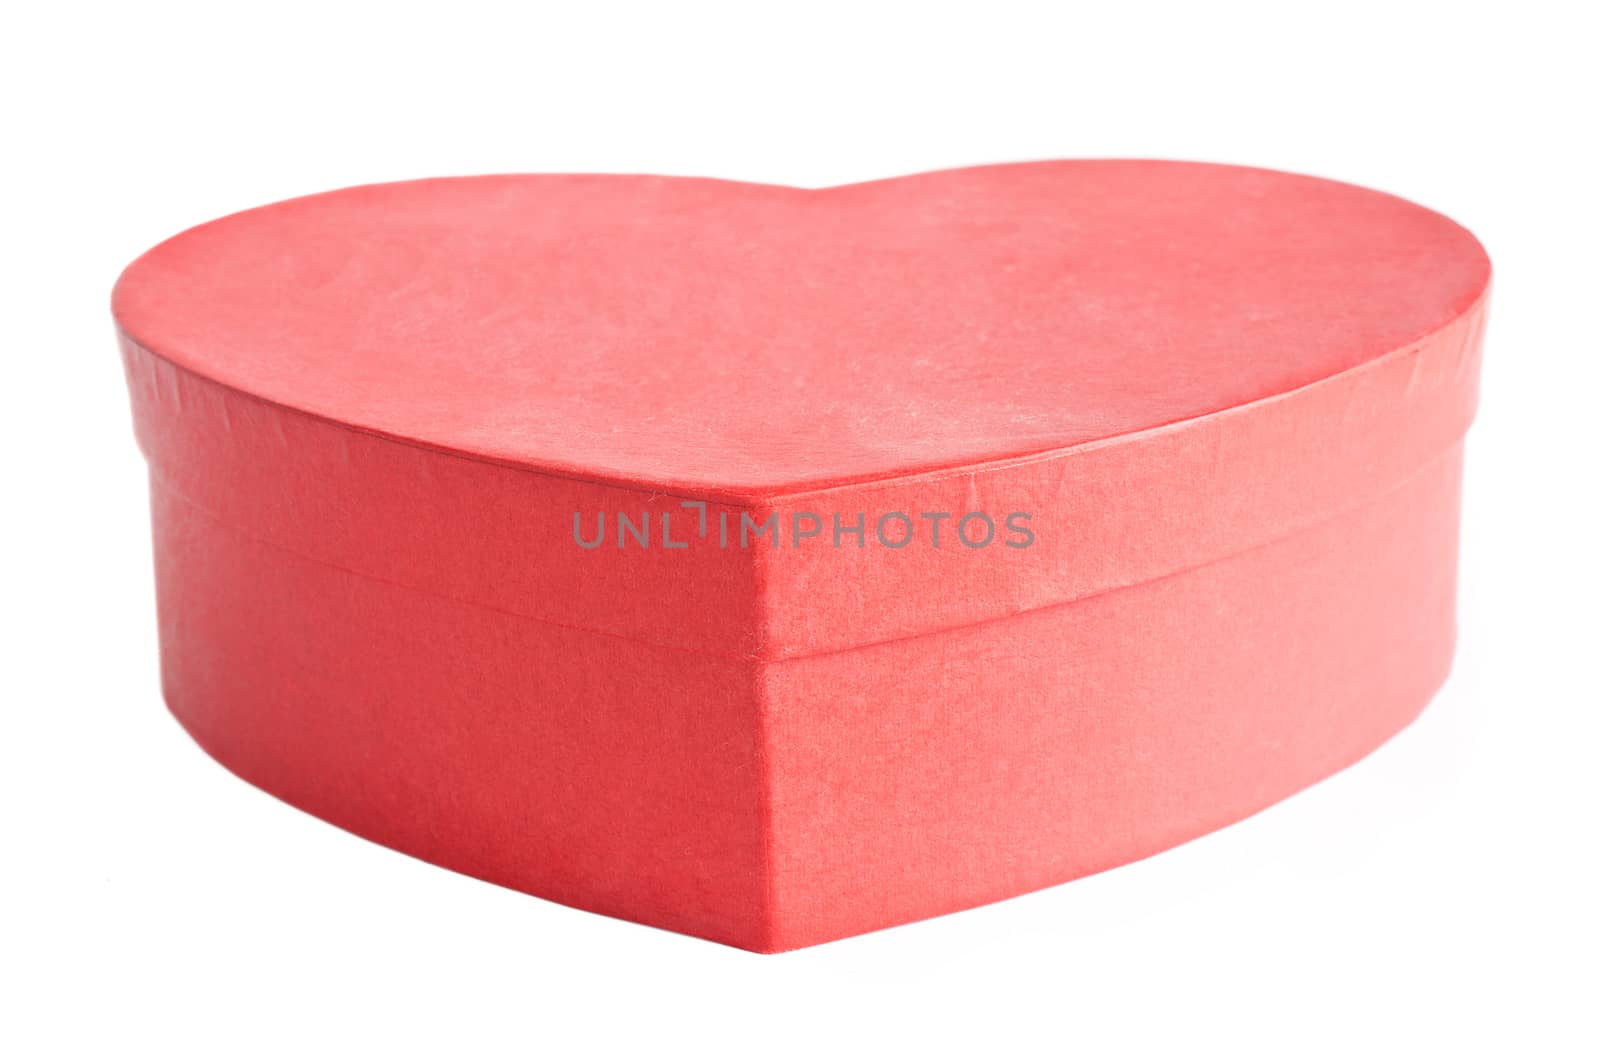 Heart box isolated on white background